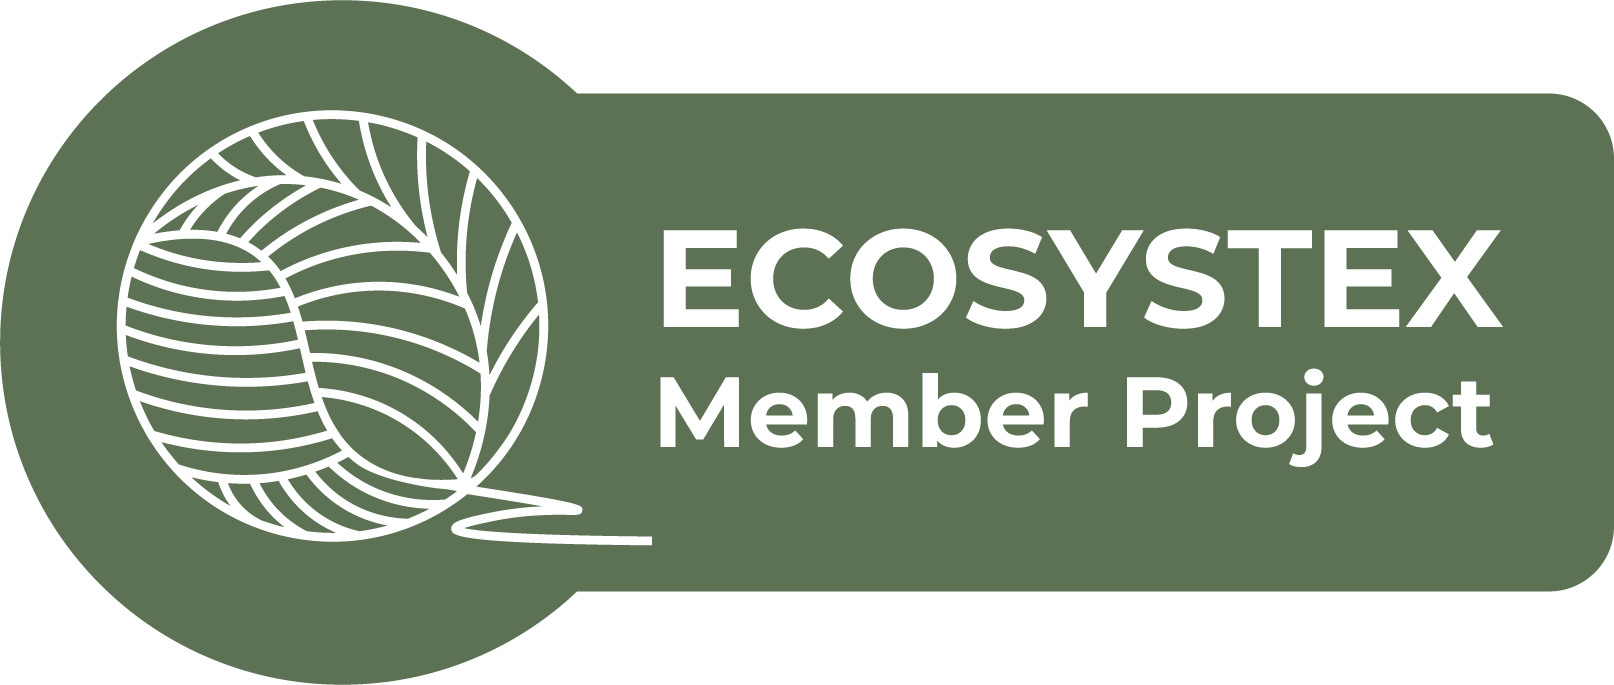 Ecosystex member